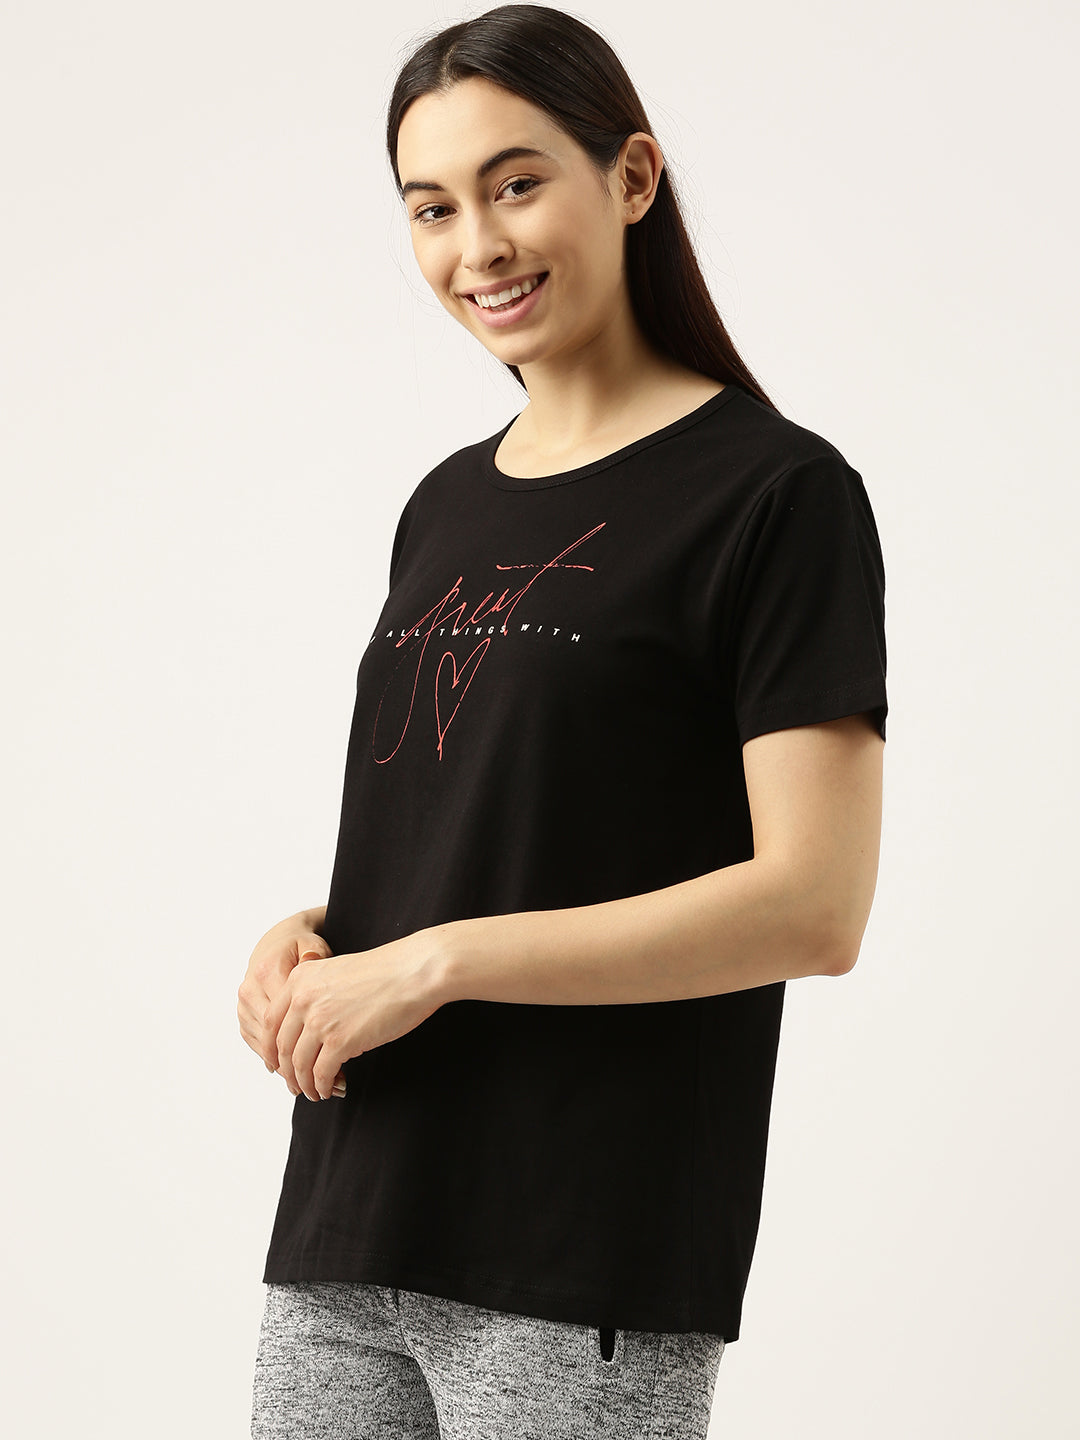 T941 Women Printed Cotton T-shirt - Clt.s